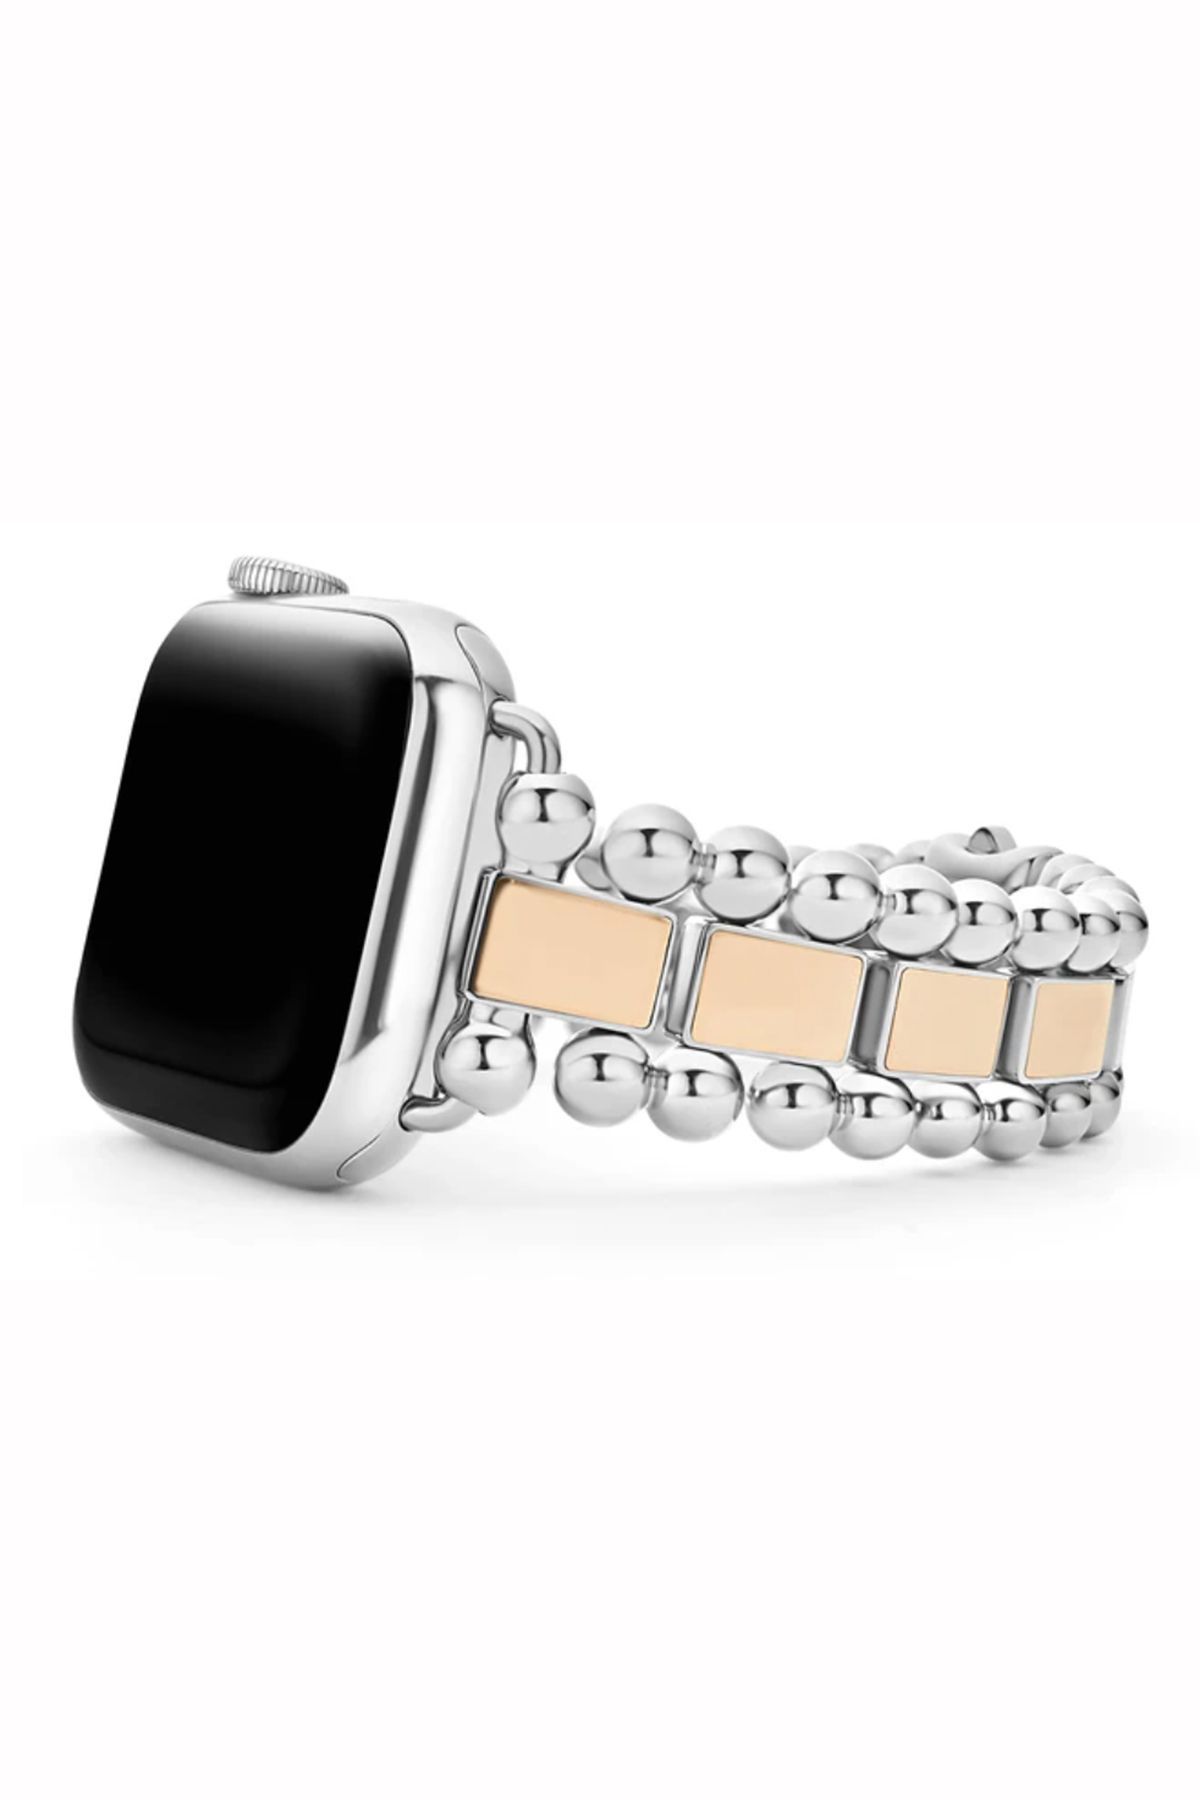 10 Best Luxury Apple Watch Bands 2022 - Stylish Apple Watch Bands